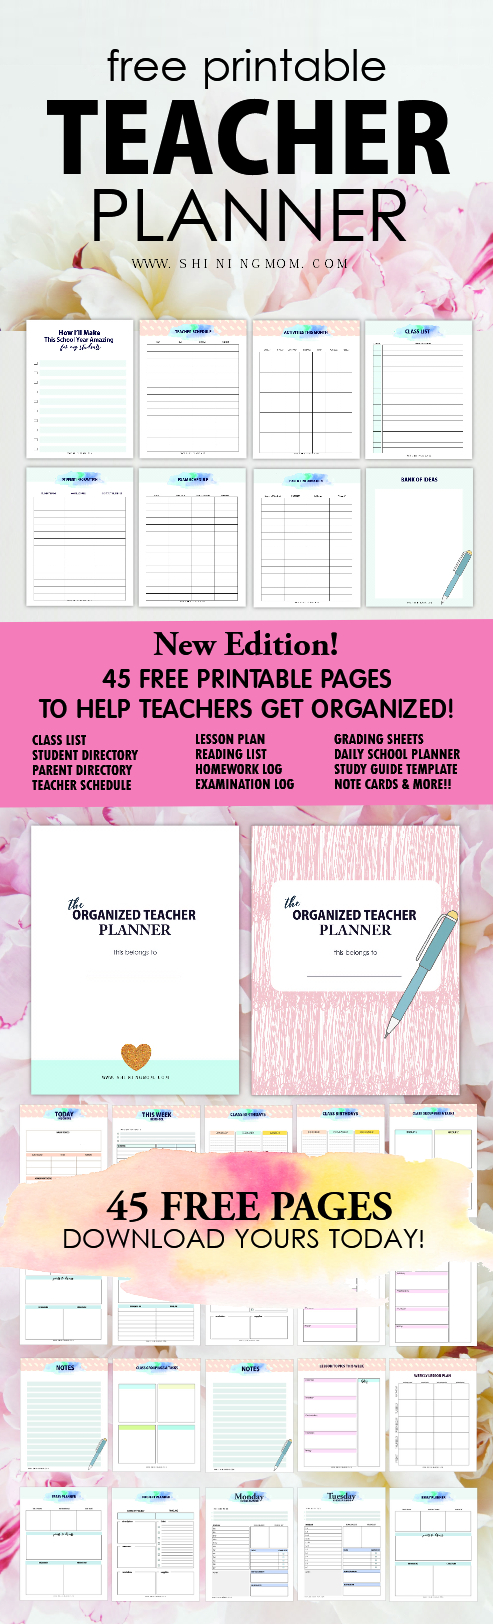 Free Printable Teacher Planner: 45+ School Organizing Templates! - Free Printable Teacher Planner